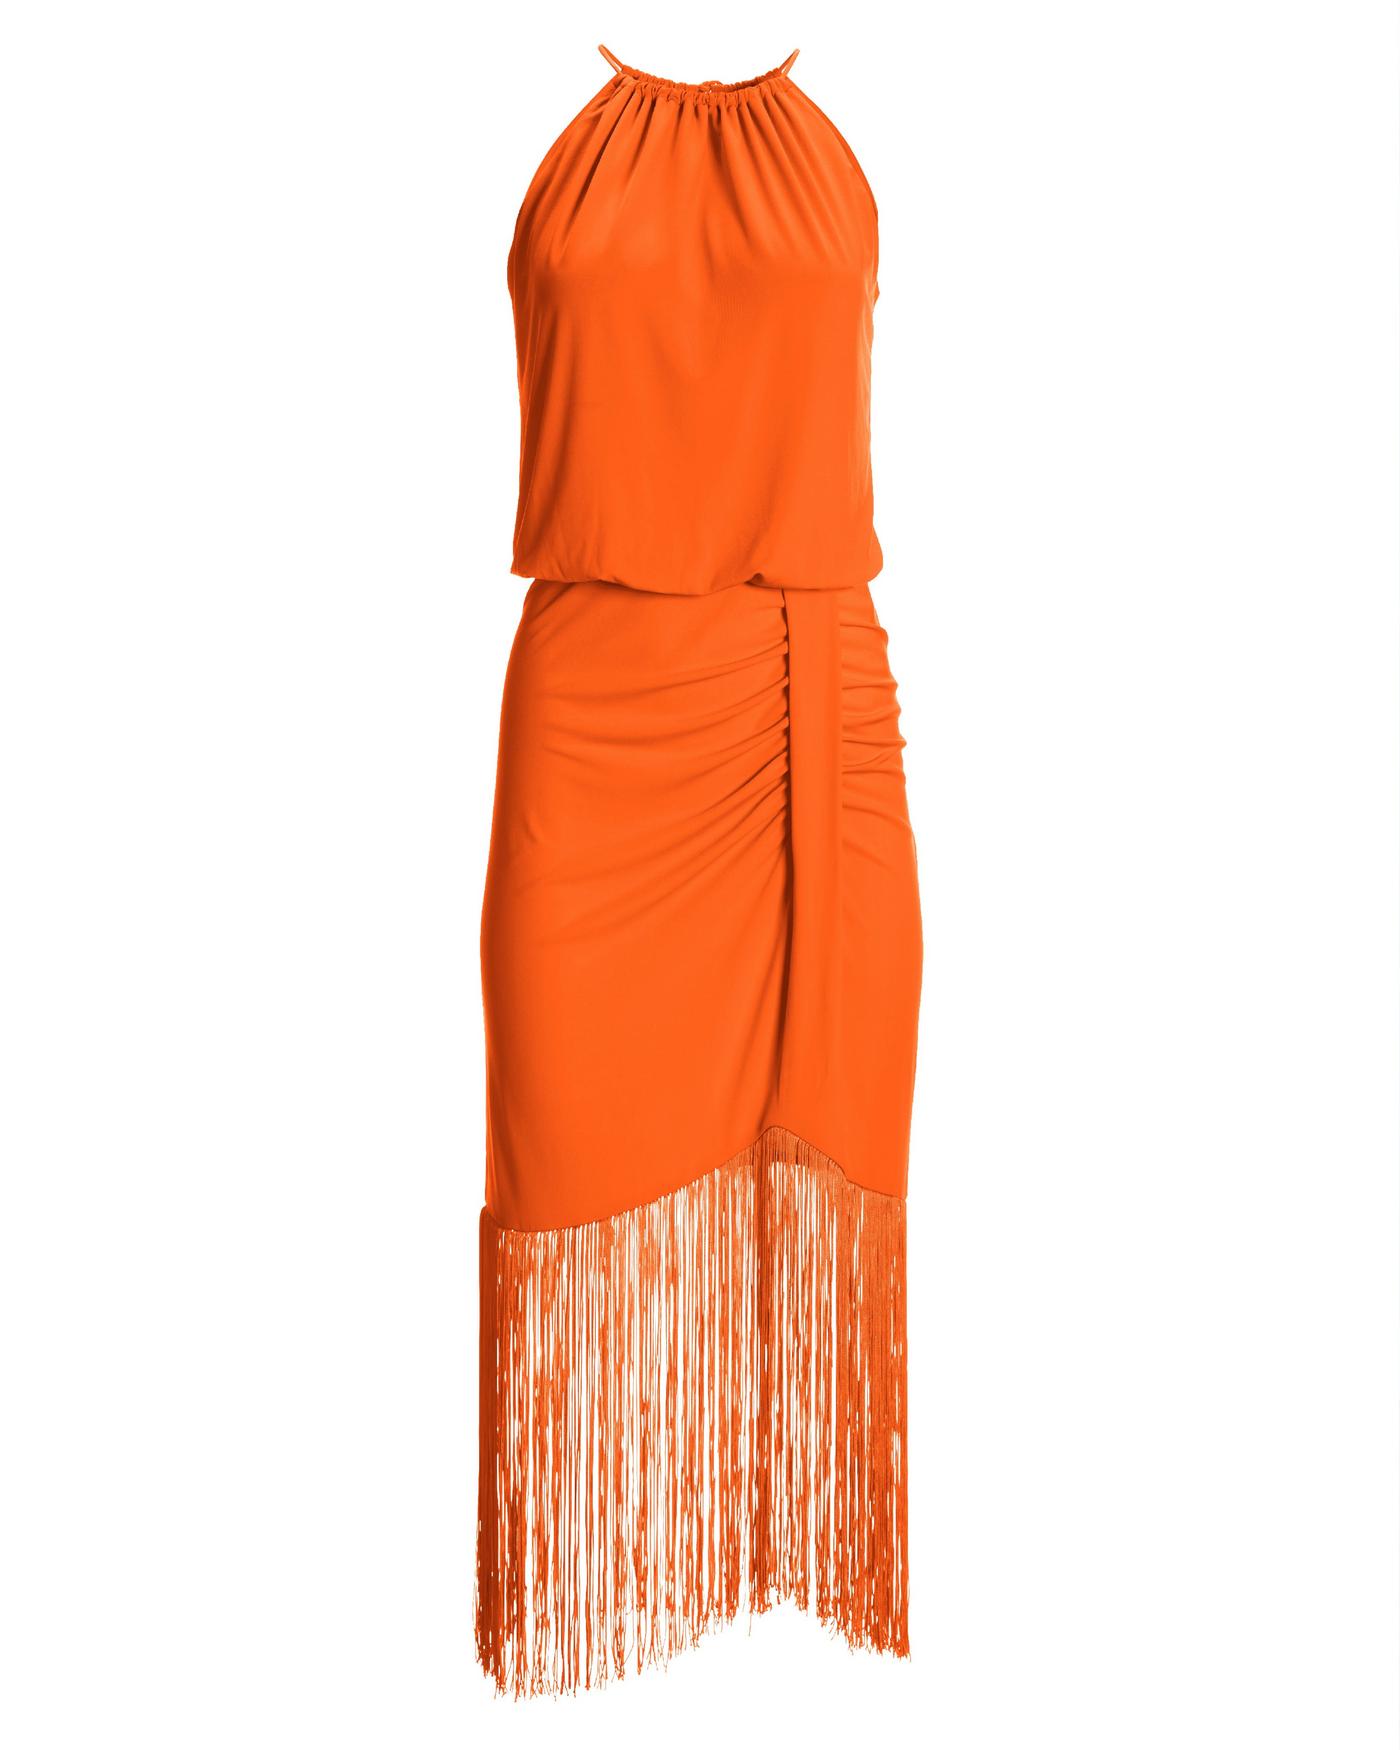 Our Elma Midi Dress looks amazing over our strapless faja! ⌛️😍 #hourg